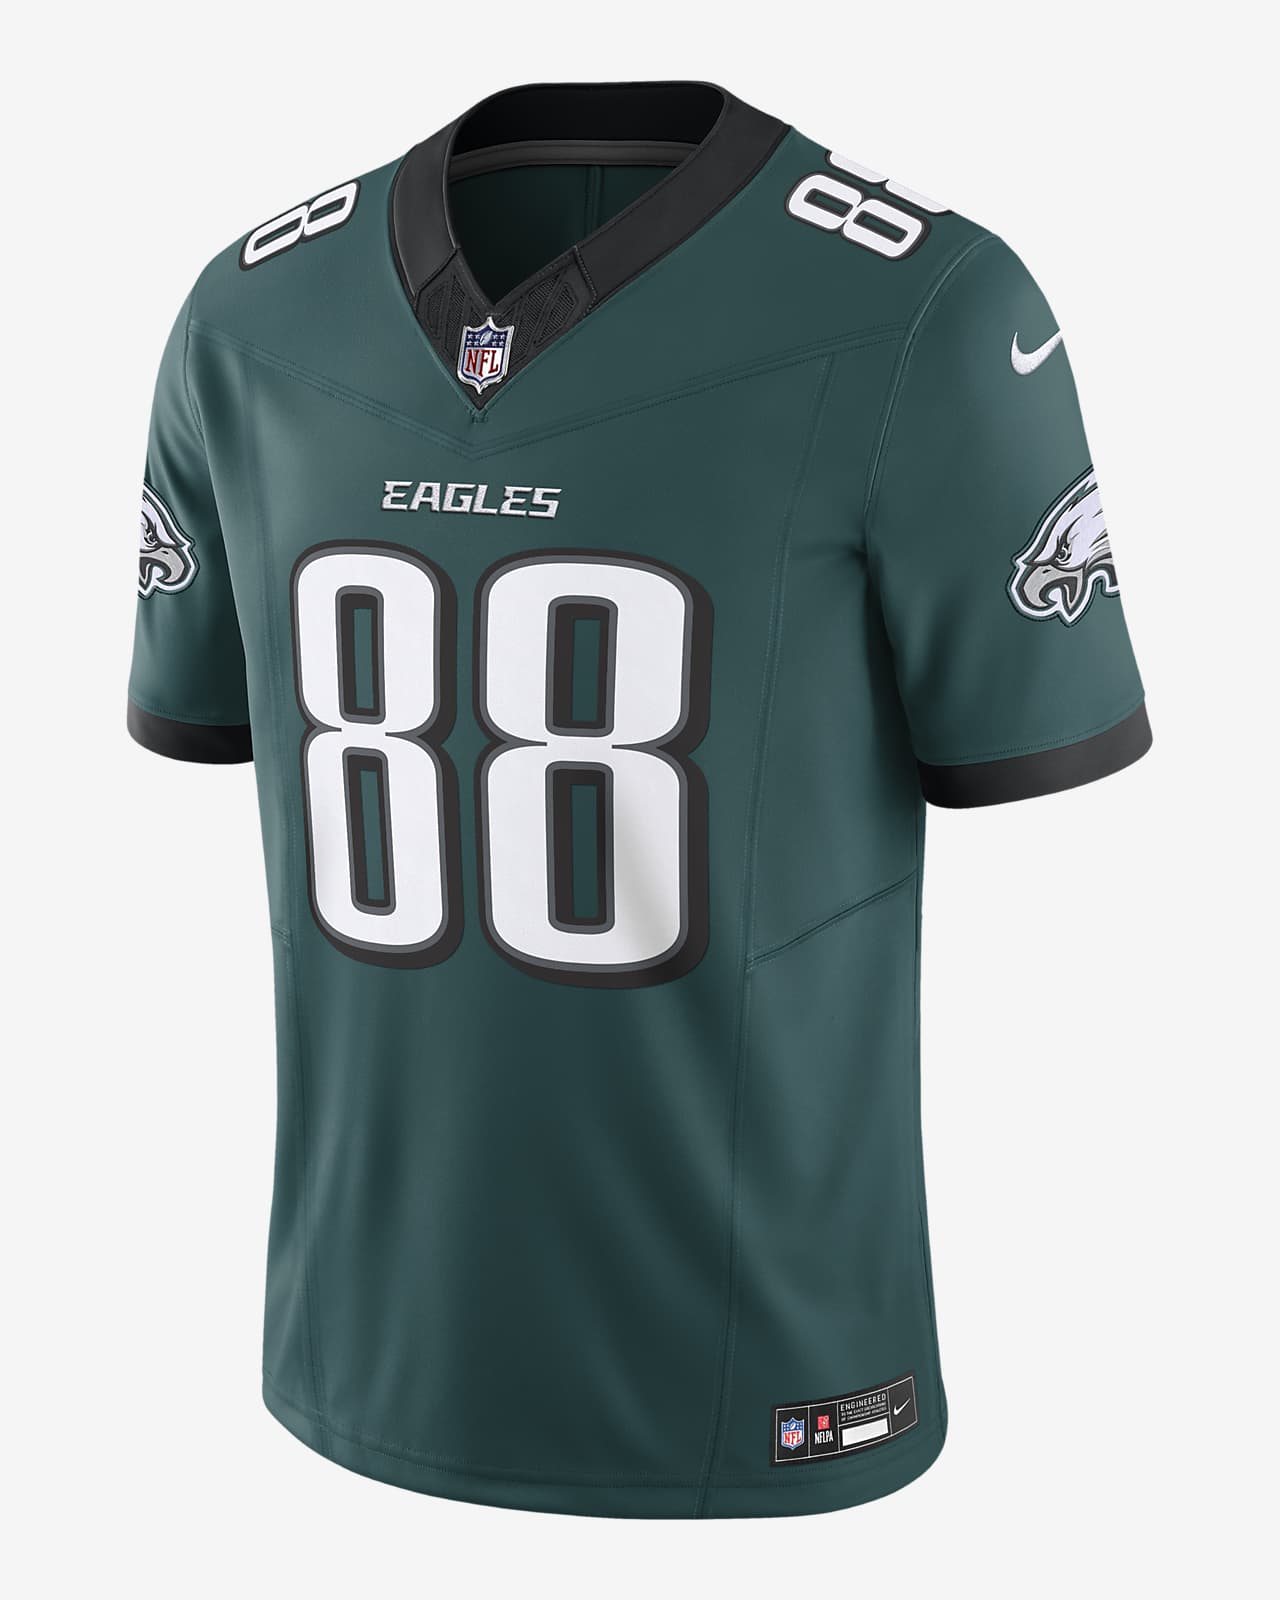 Jersey de fútbol americano Nike Dri-FIT de la NFL Limited para hombre Dallas Goedert Philadelphia Eagles